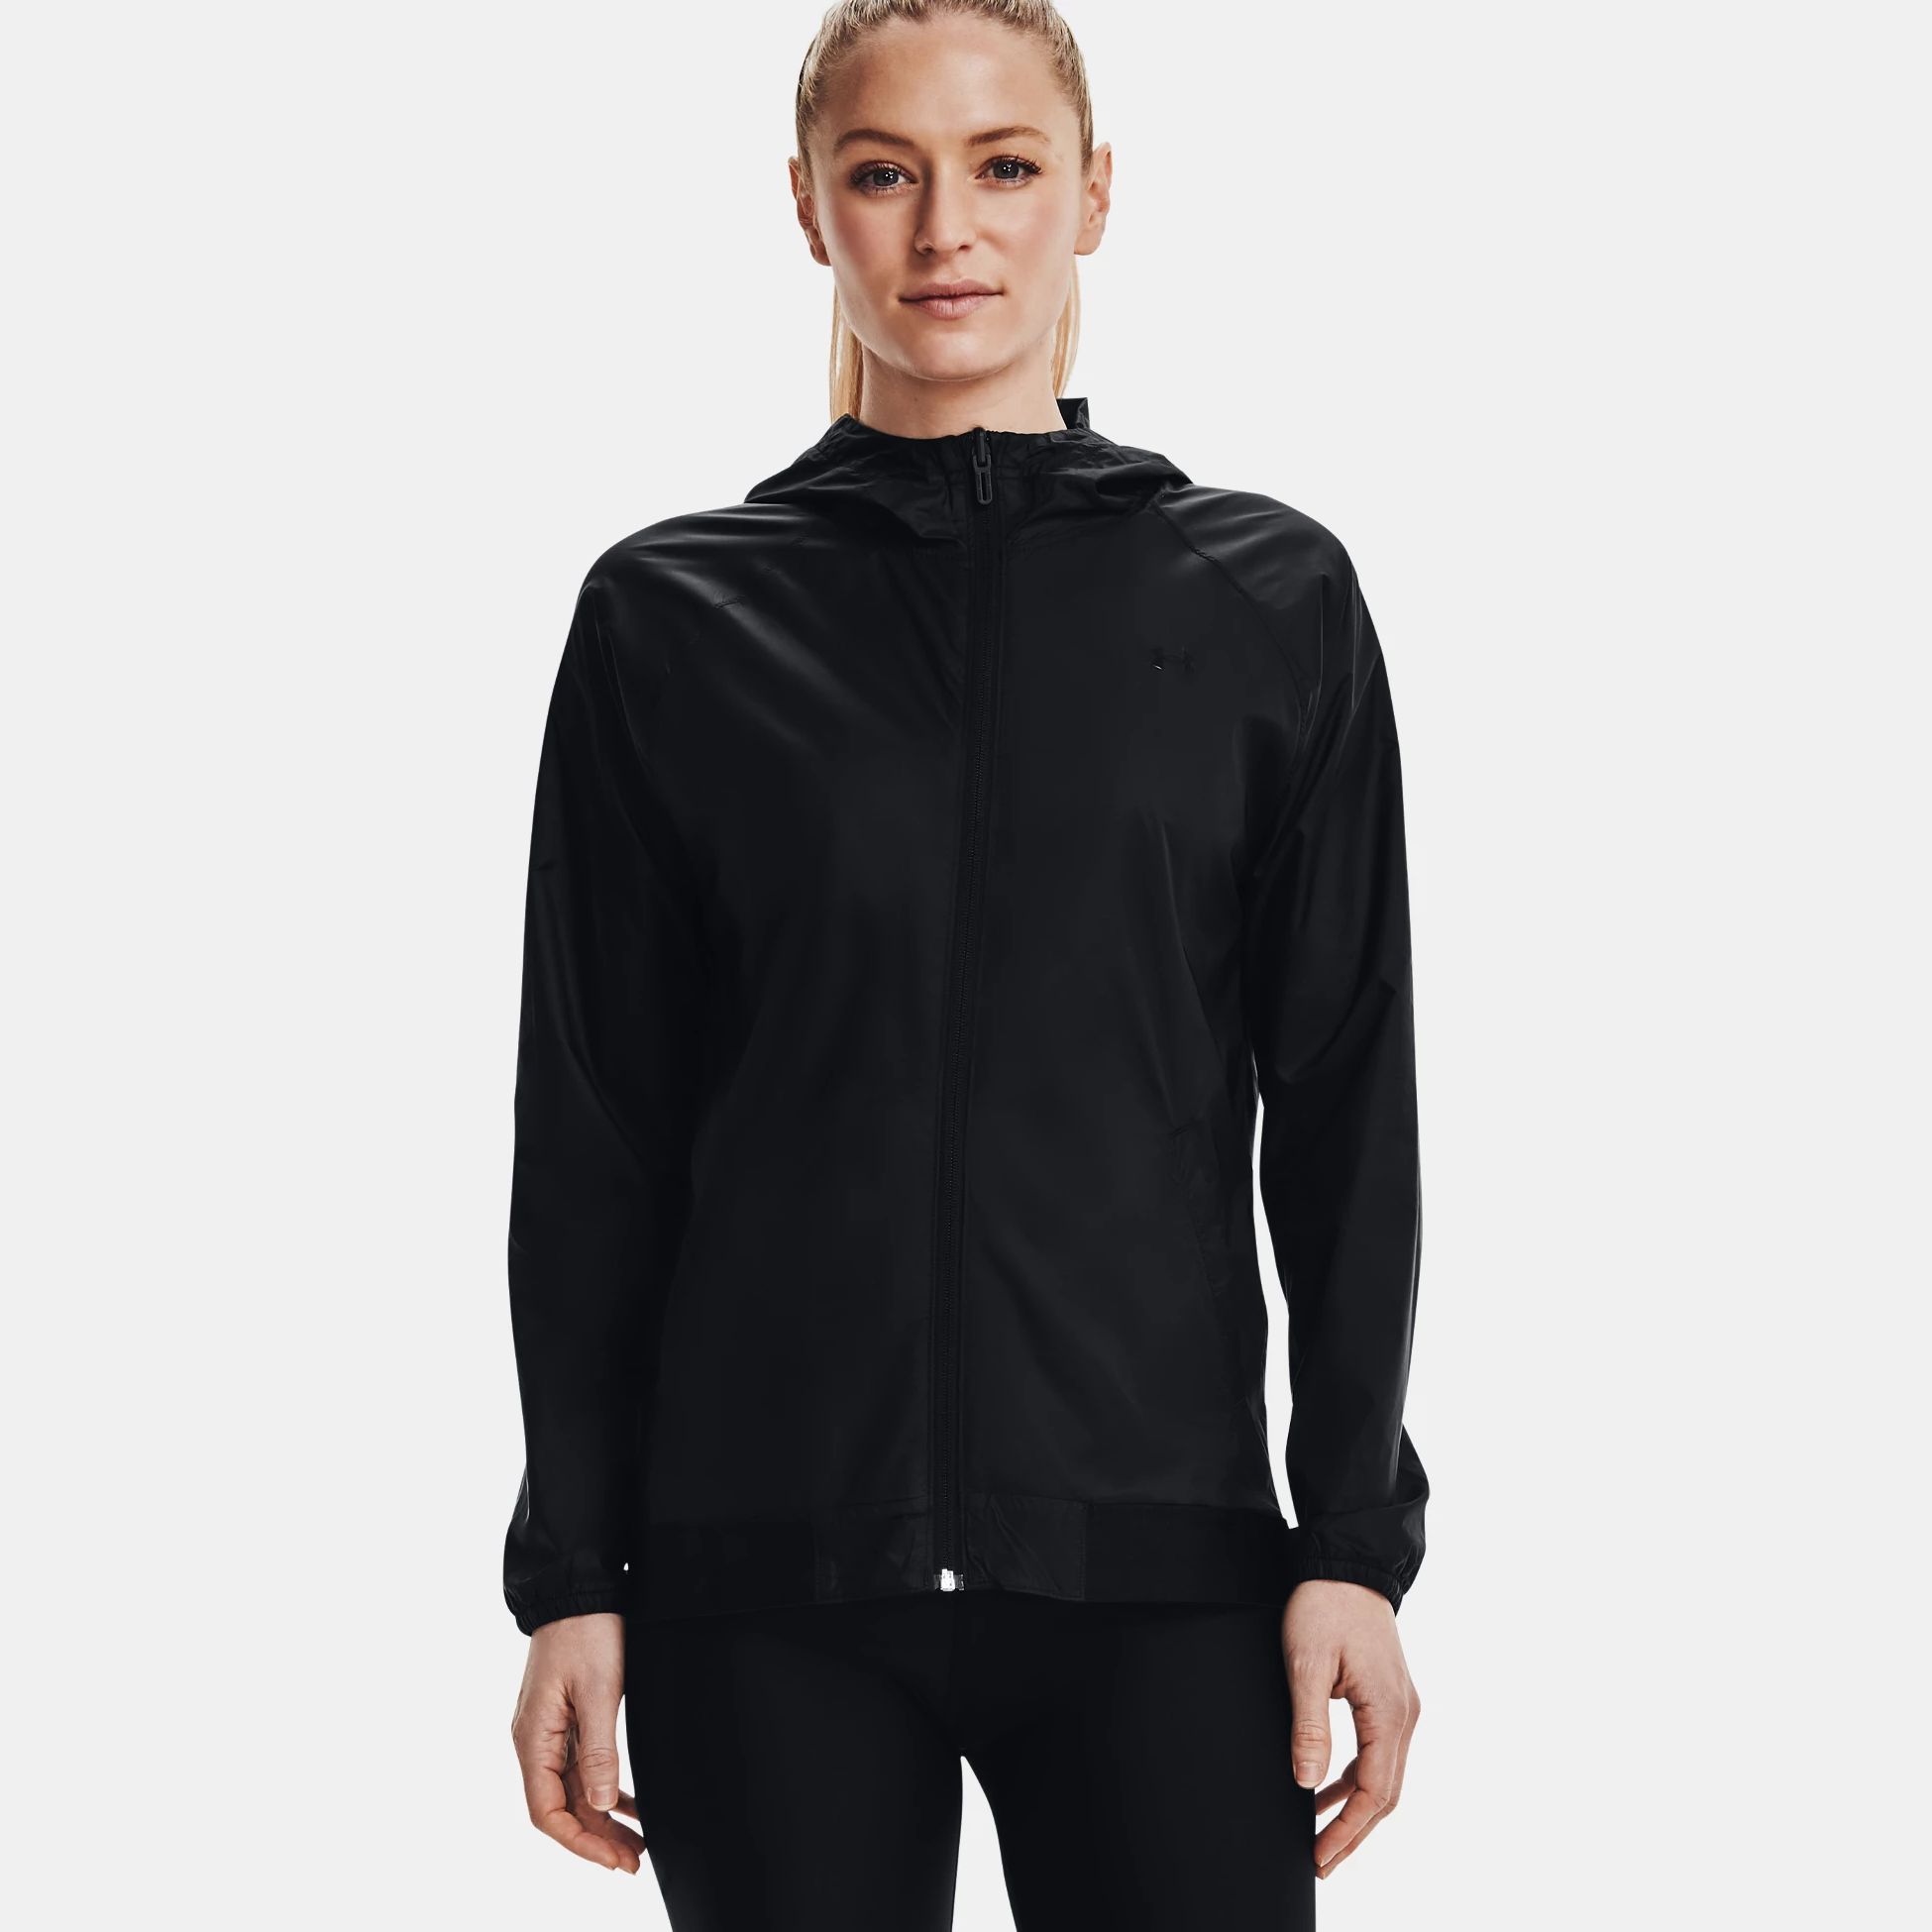 Reversible UA Woven | Full Zip | Under armour Jacket Jackets & Clothing Vests